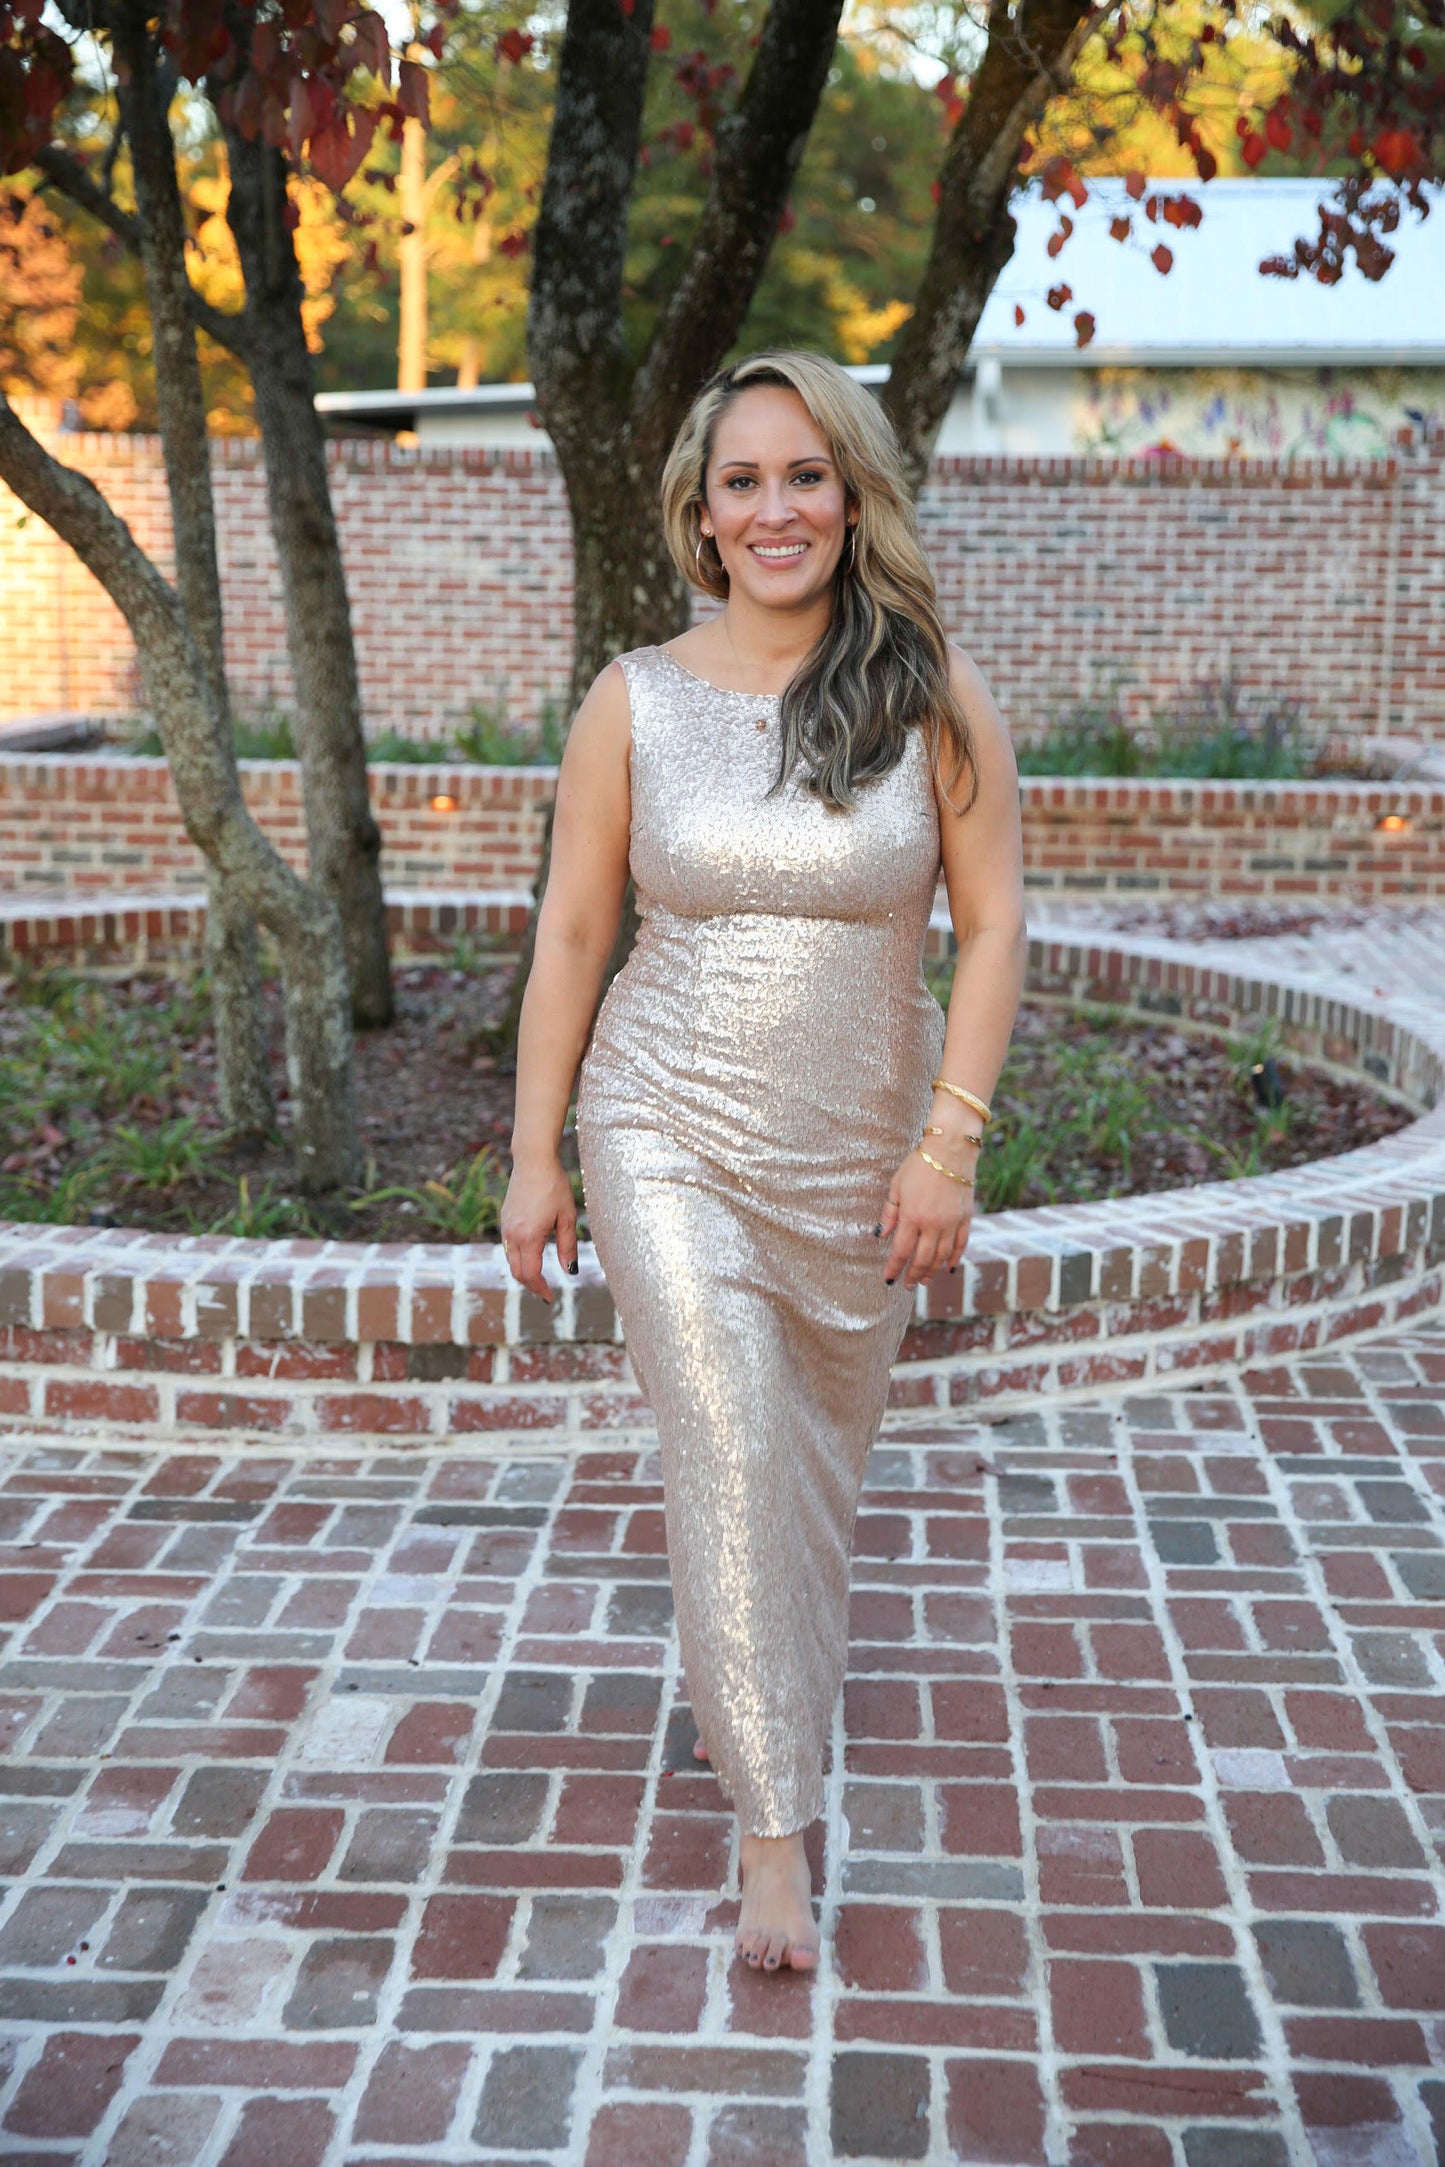 Gold Sparkly Sequin Dress Rental - Size Large